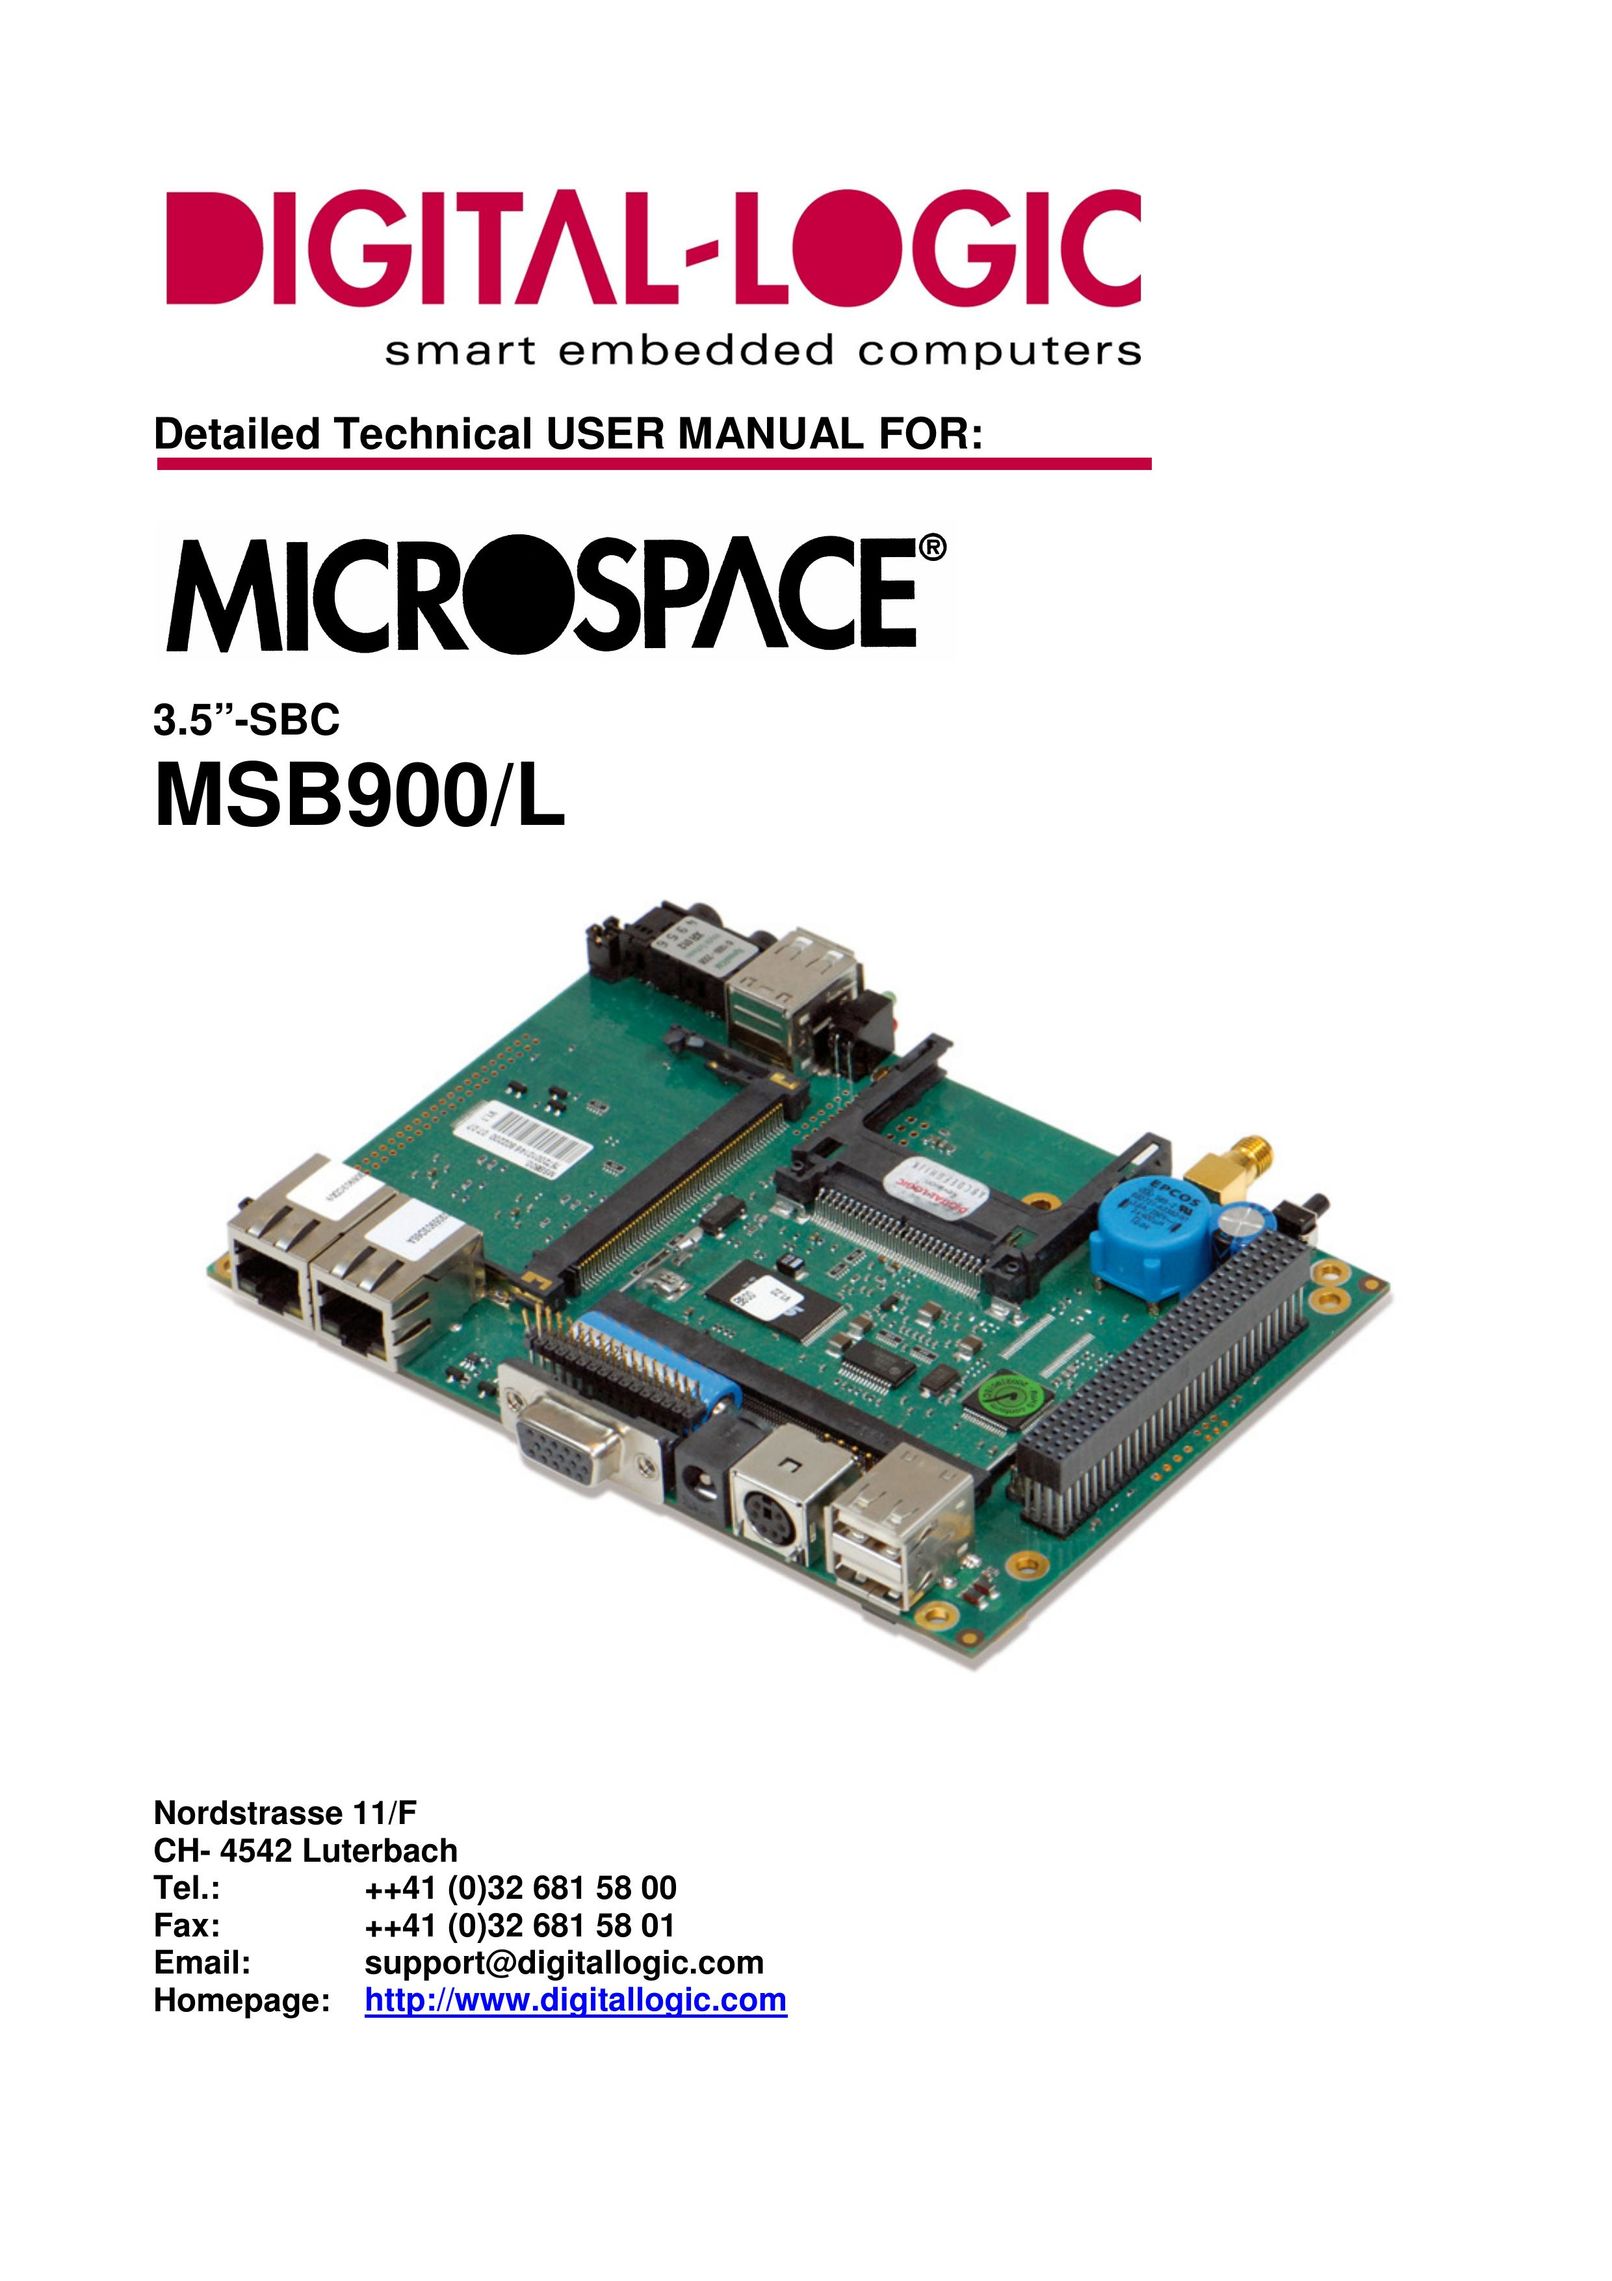 Compaq MSB900 Computer Hardware User Manual